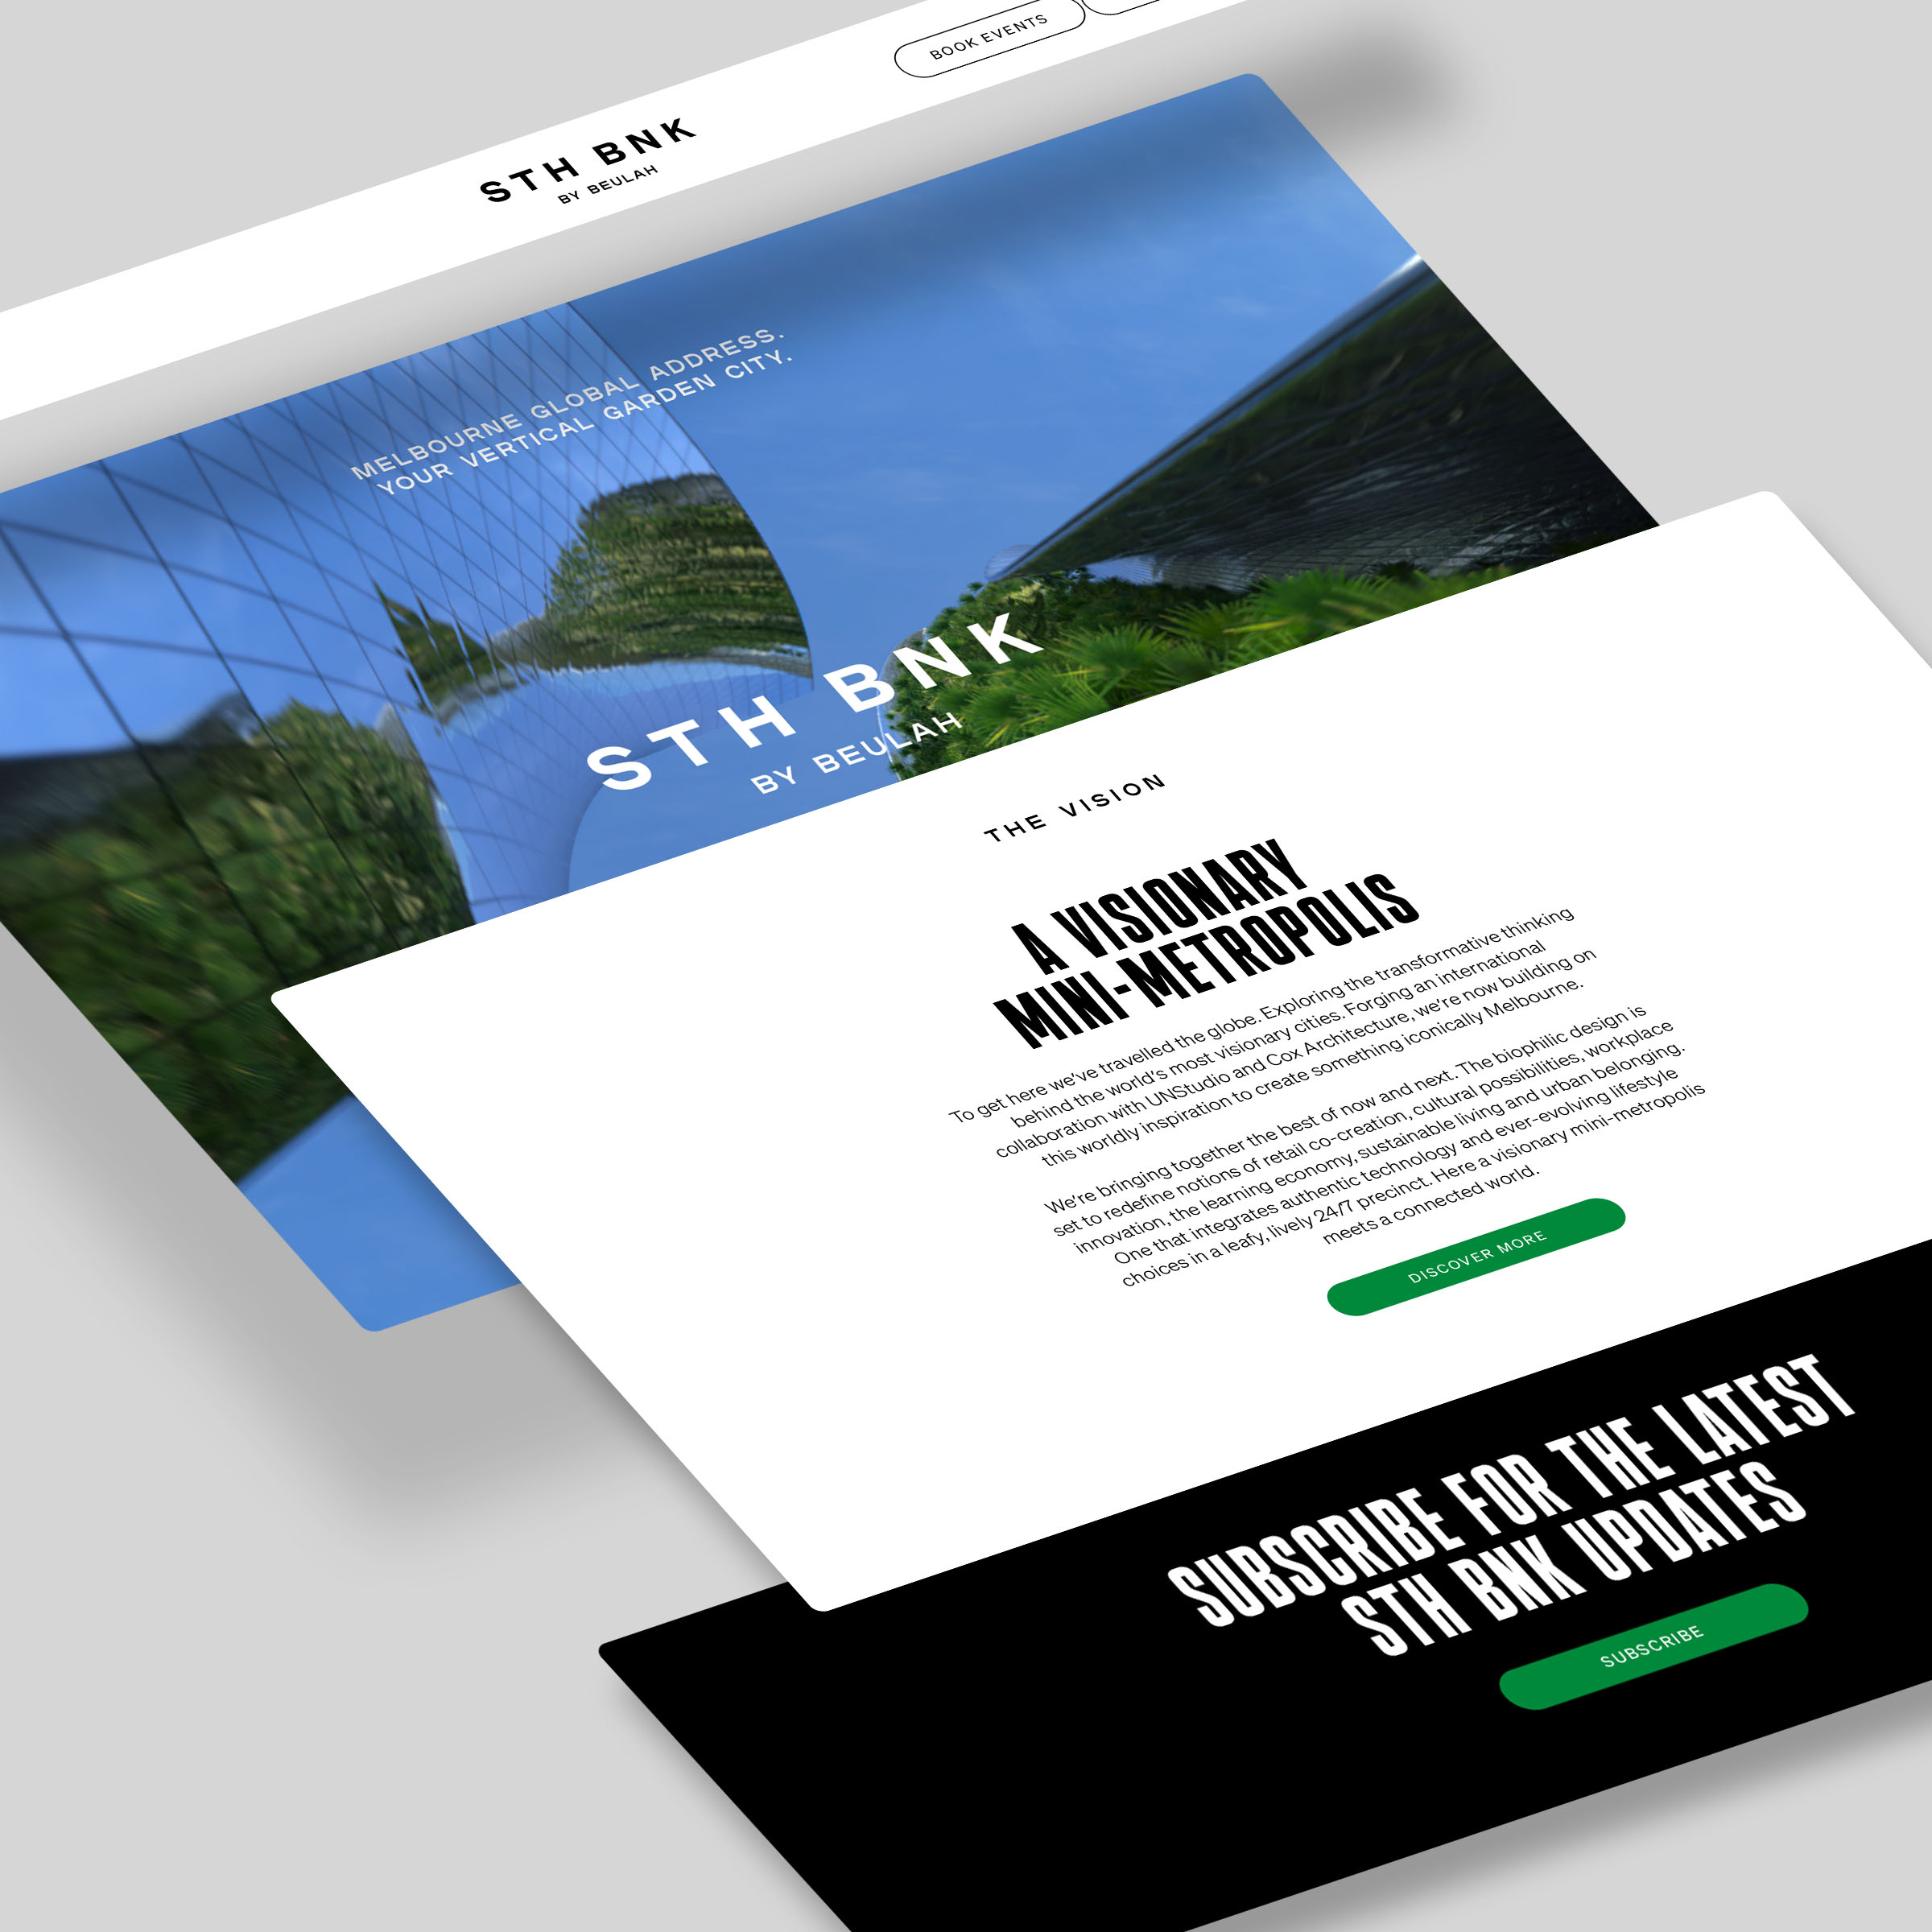 STH BNK By Beulah - Modular website design